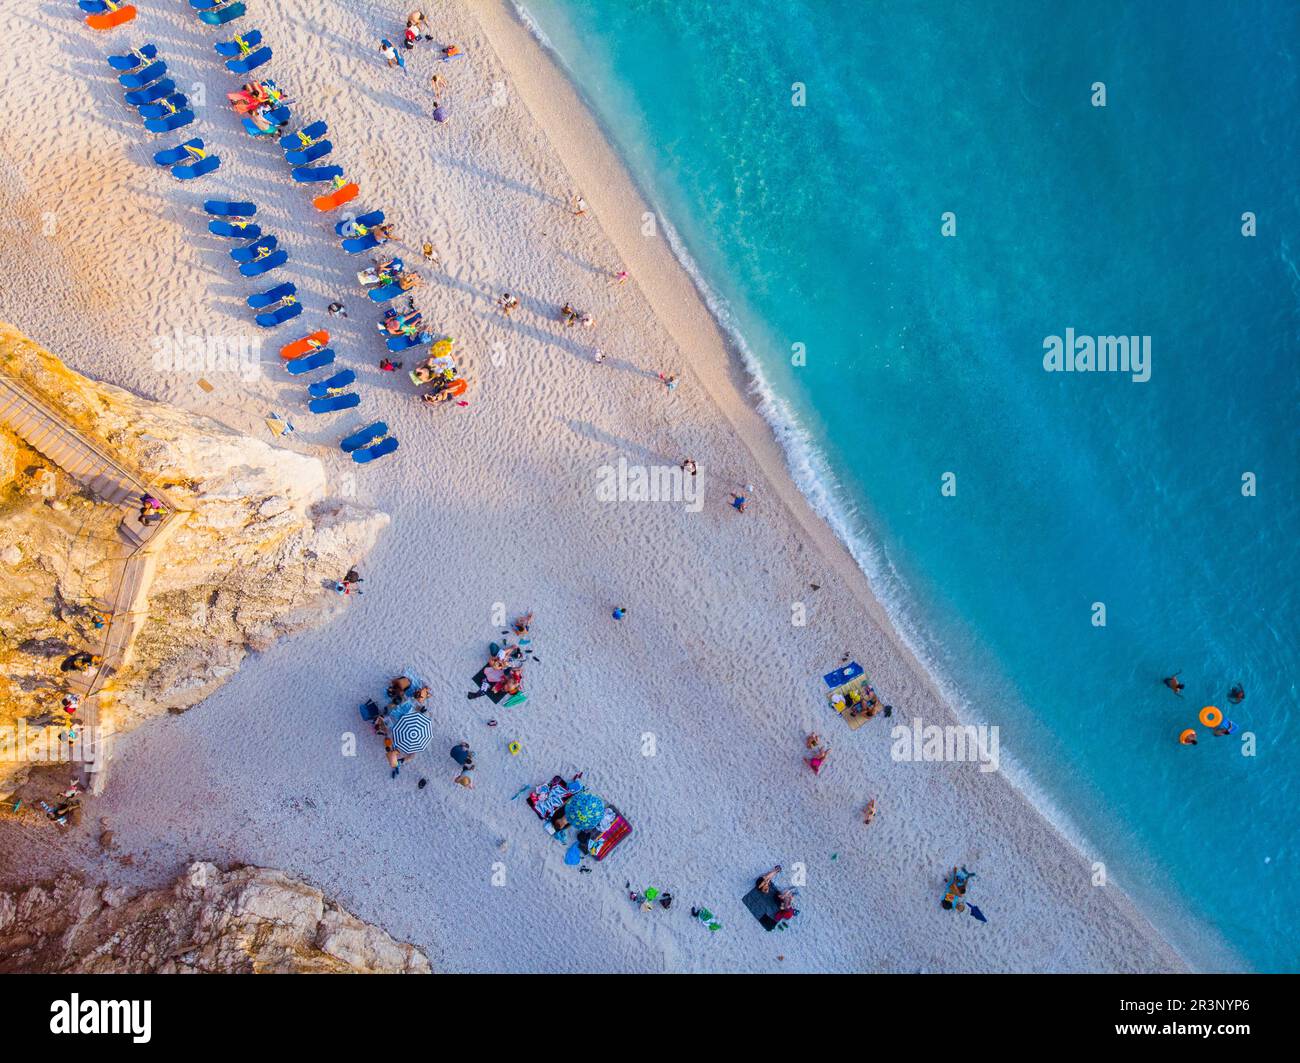 Greece. the island of Lefkas. Coast of the Ionian Sea. Porto Katsiki beach. Popular tourist spot. Drone. Aerial view Stock Photo